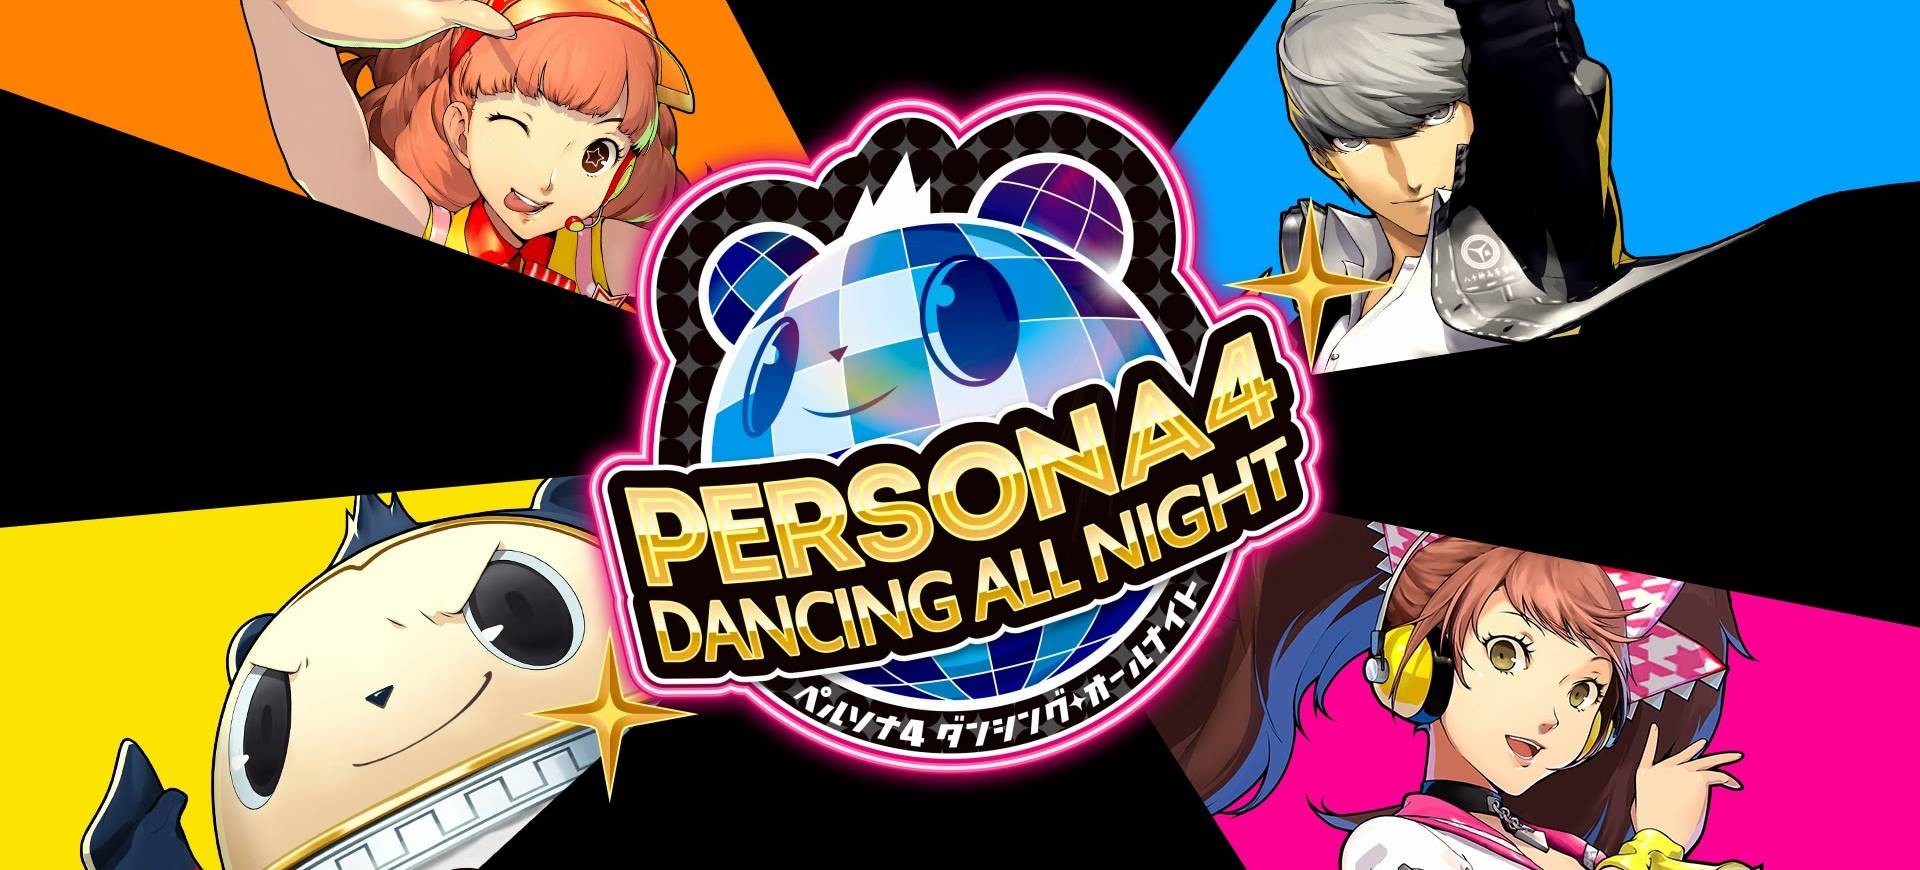 Persona-4-dancing-all-night-news